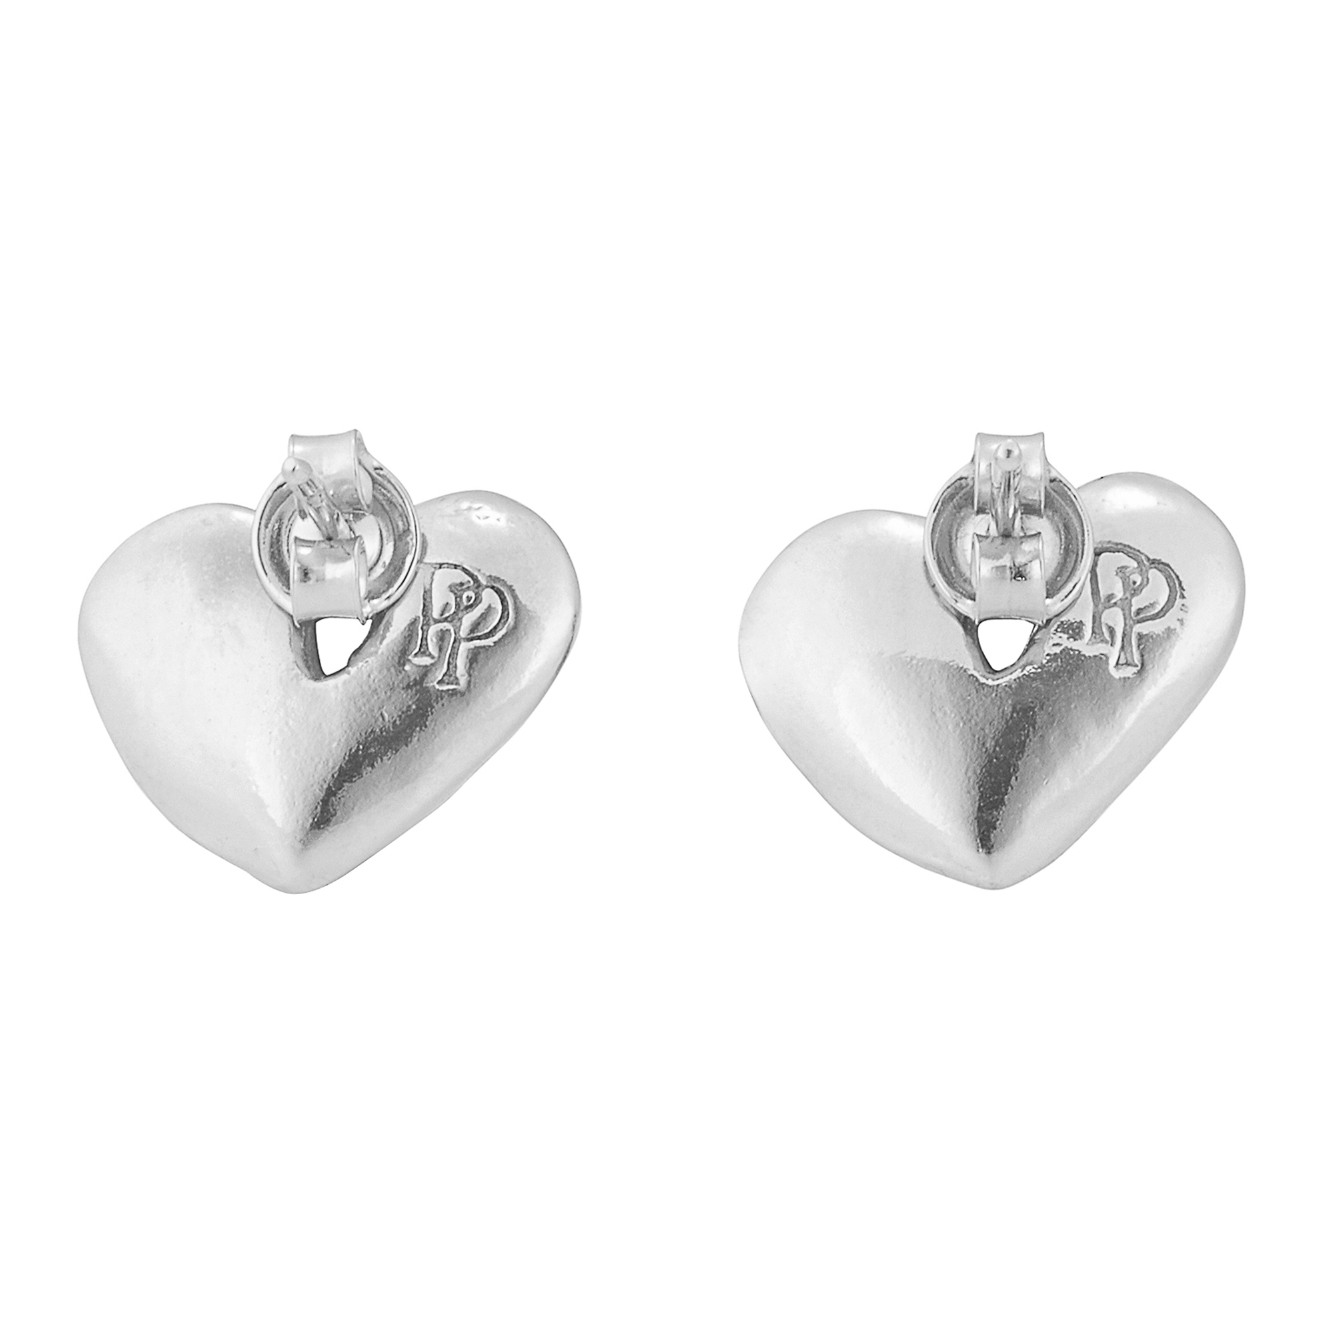 Le Coeur Silver Earrings